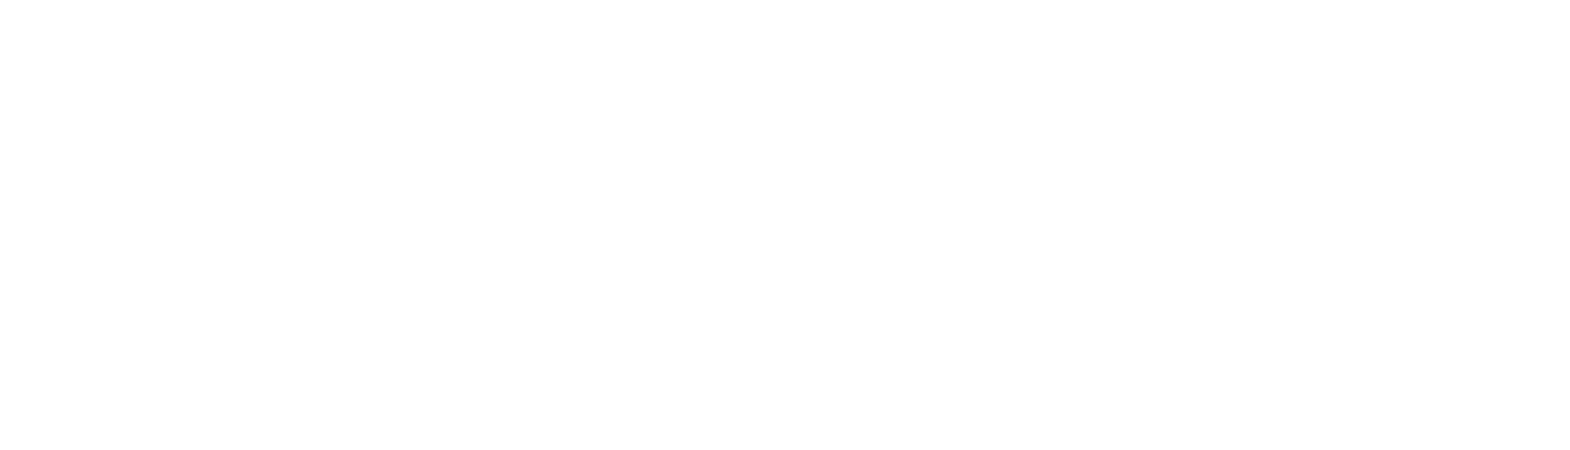 Global Fashion Group logo large for dark backgrounds (transparent PNG)